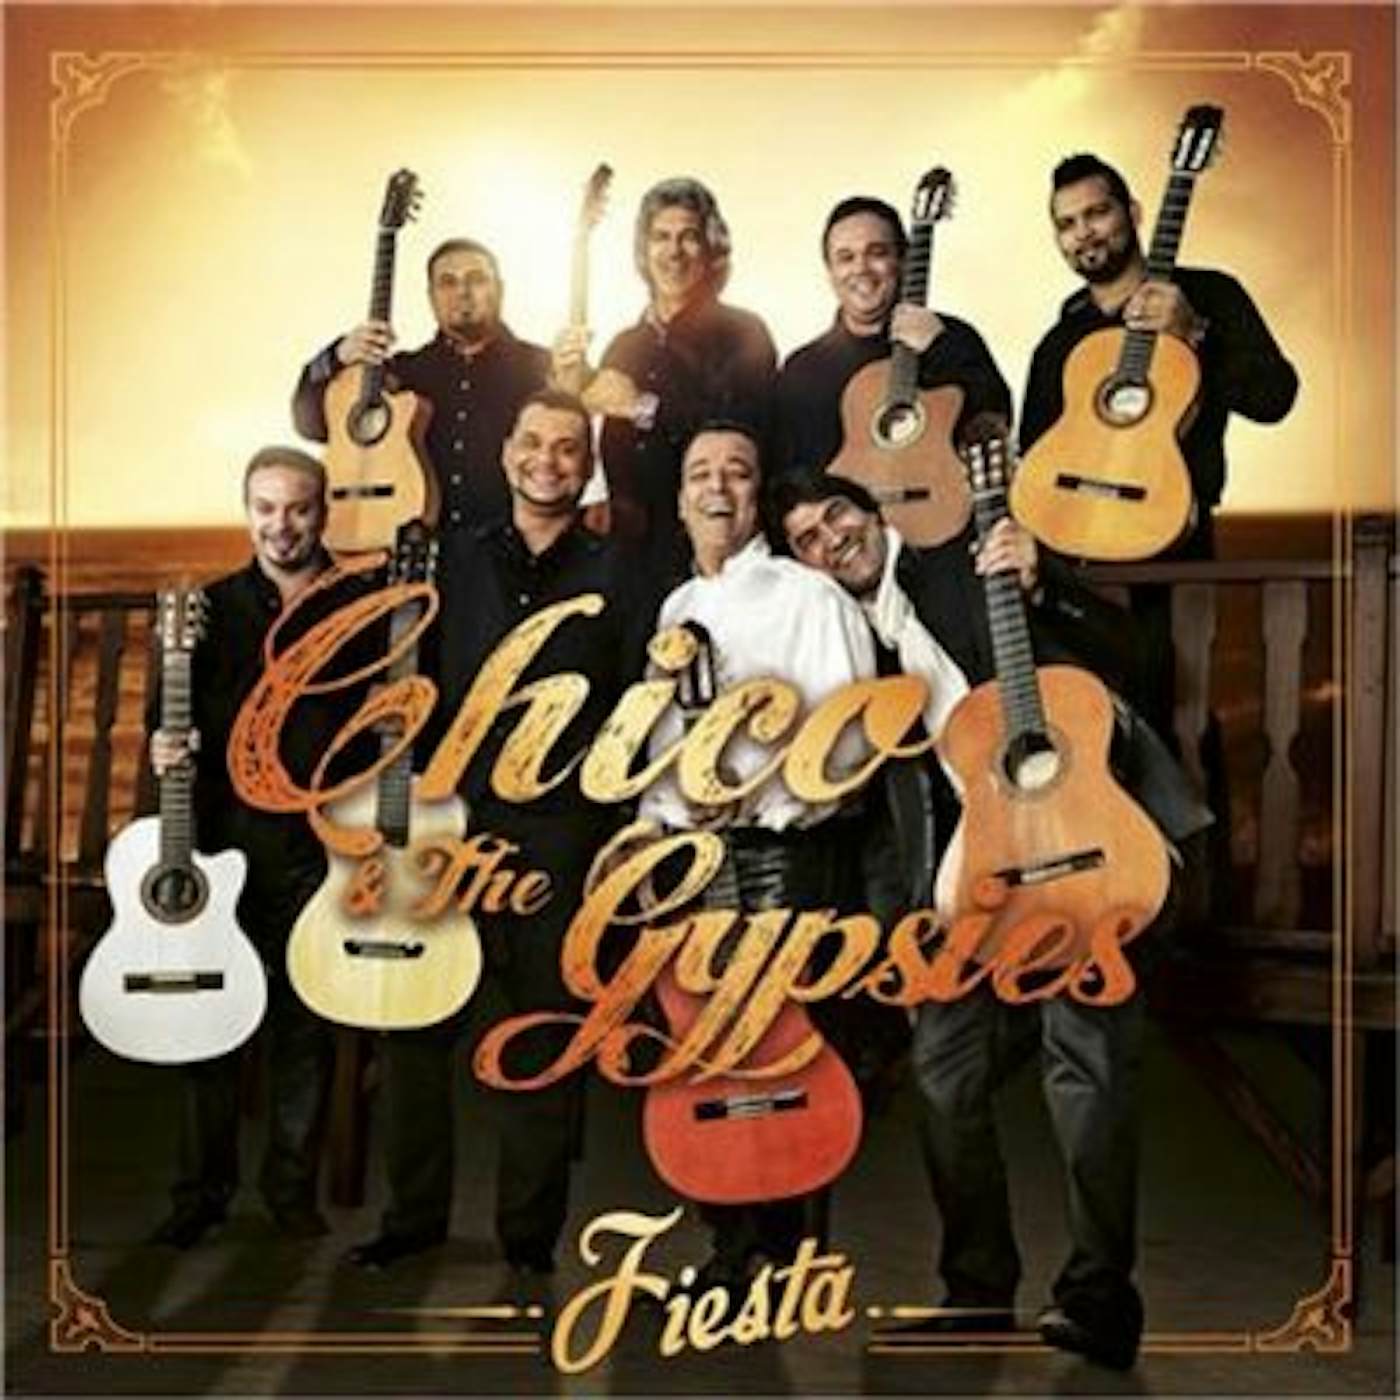 Chico & The Gypsies FIESTA CD